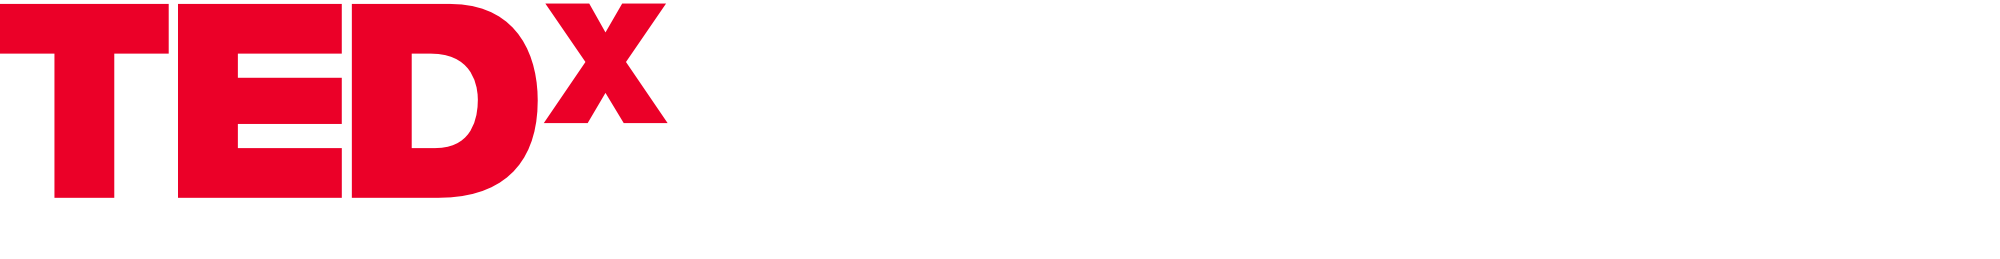 Tedx Cambridge logo